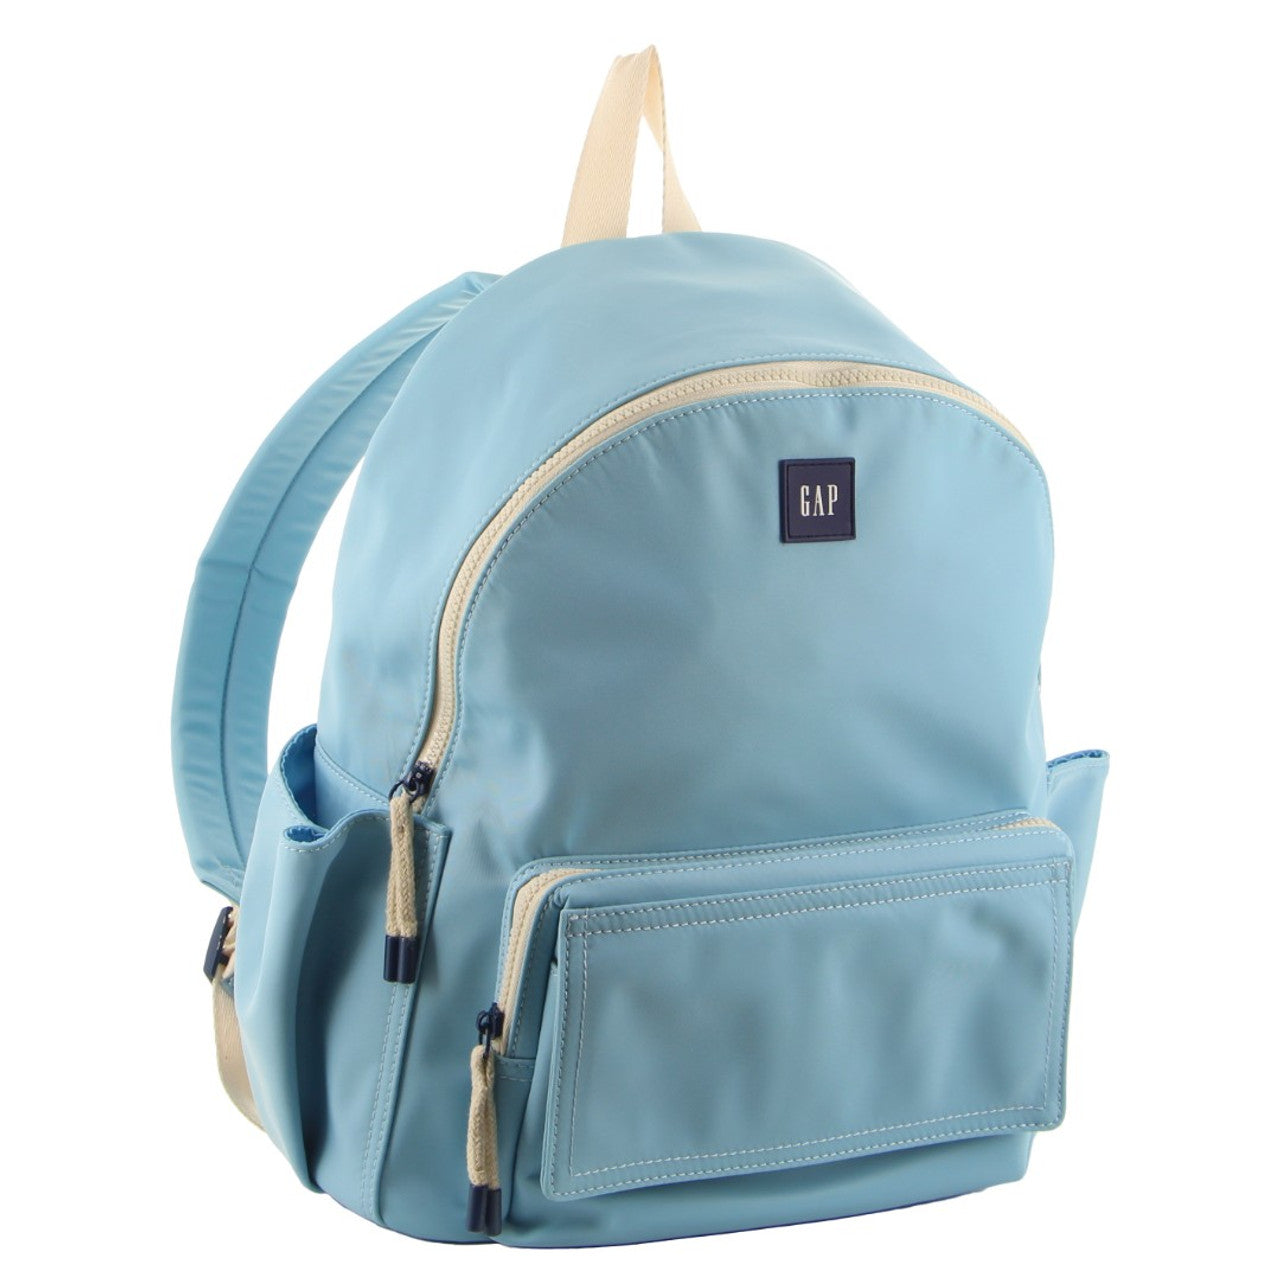 GAP - 11 Nylon Backpack front pocket - Light Blue-1